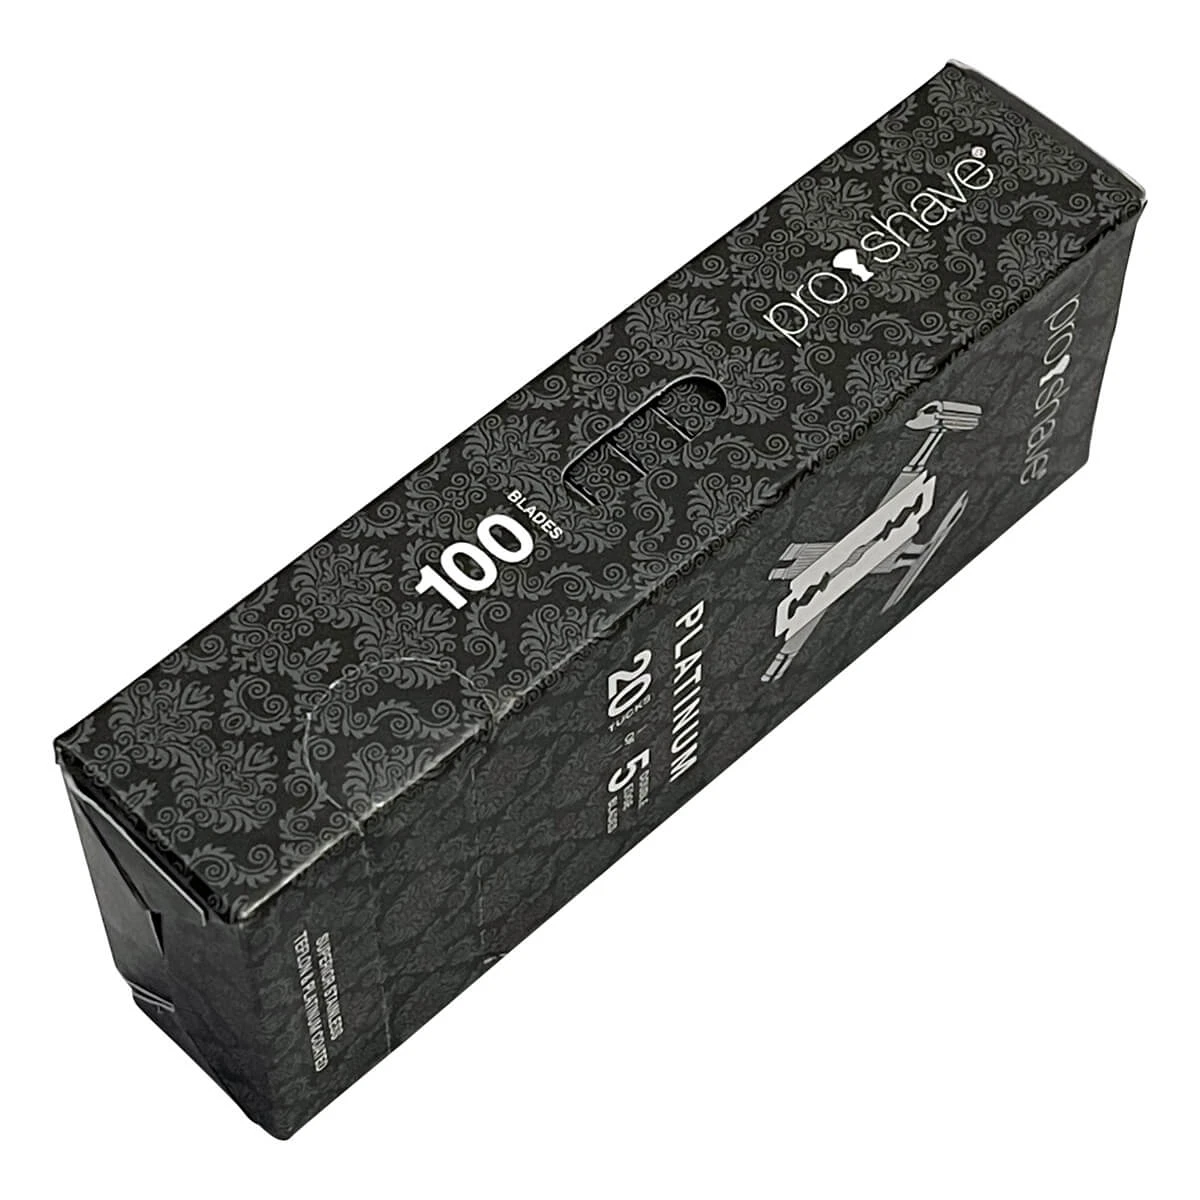 100 Tiger Platinum Double Edge Safety Razor Blades, 20 packs of 5 (100  blades)